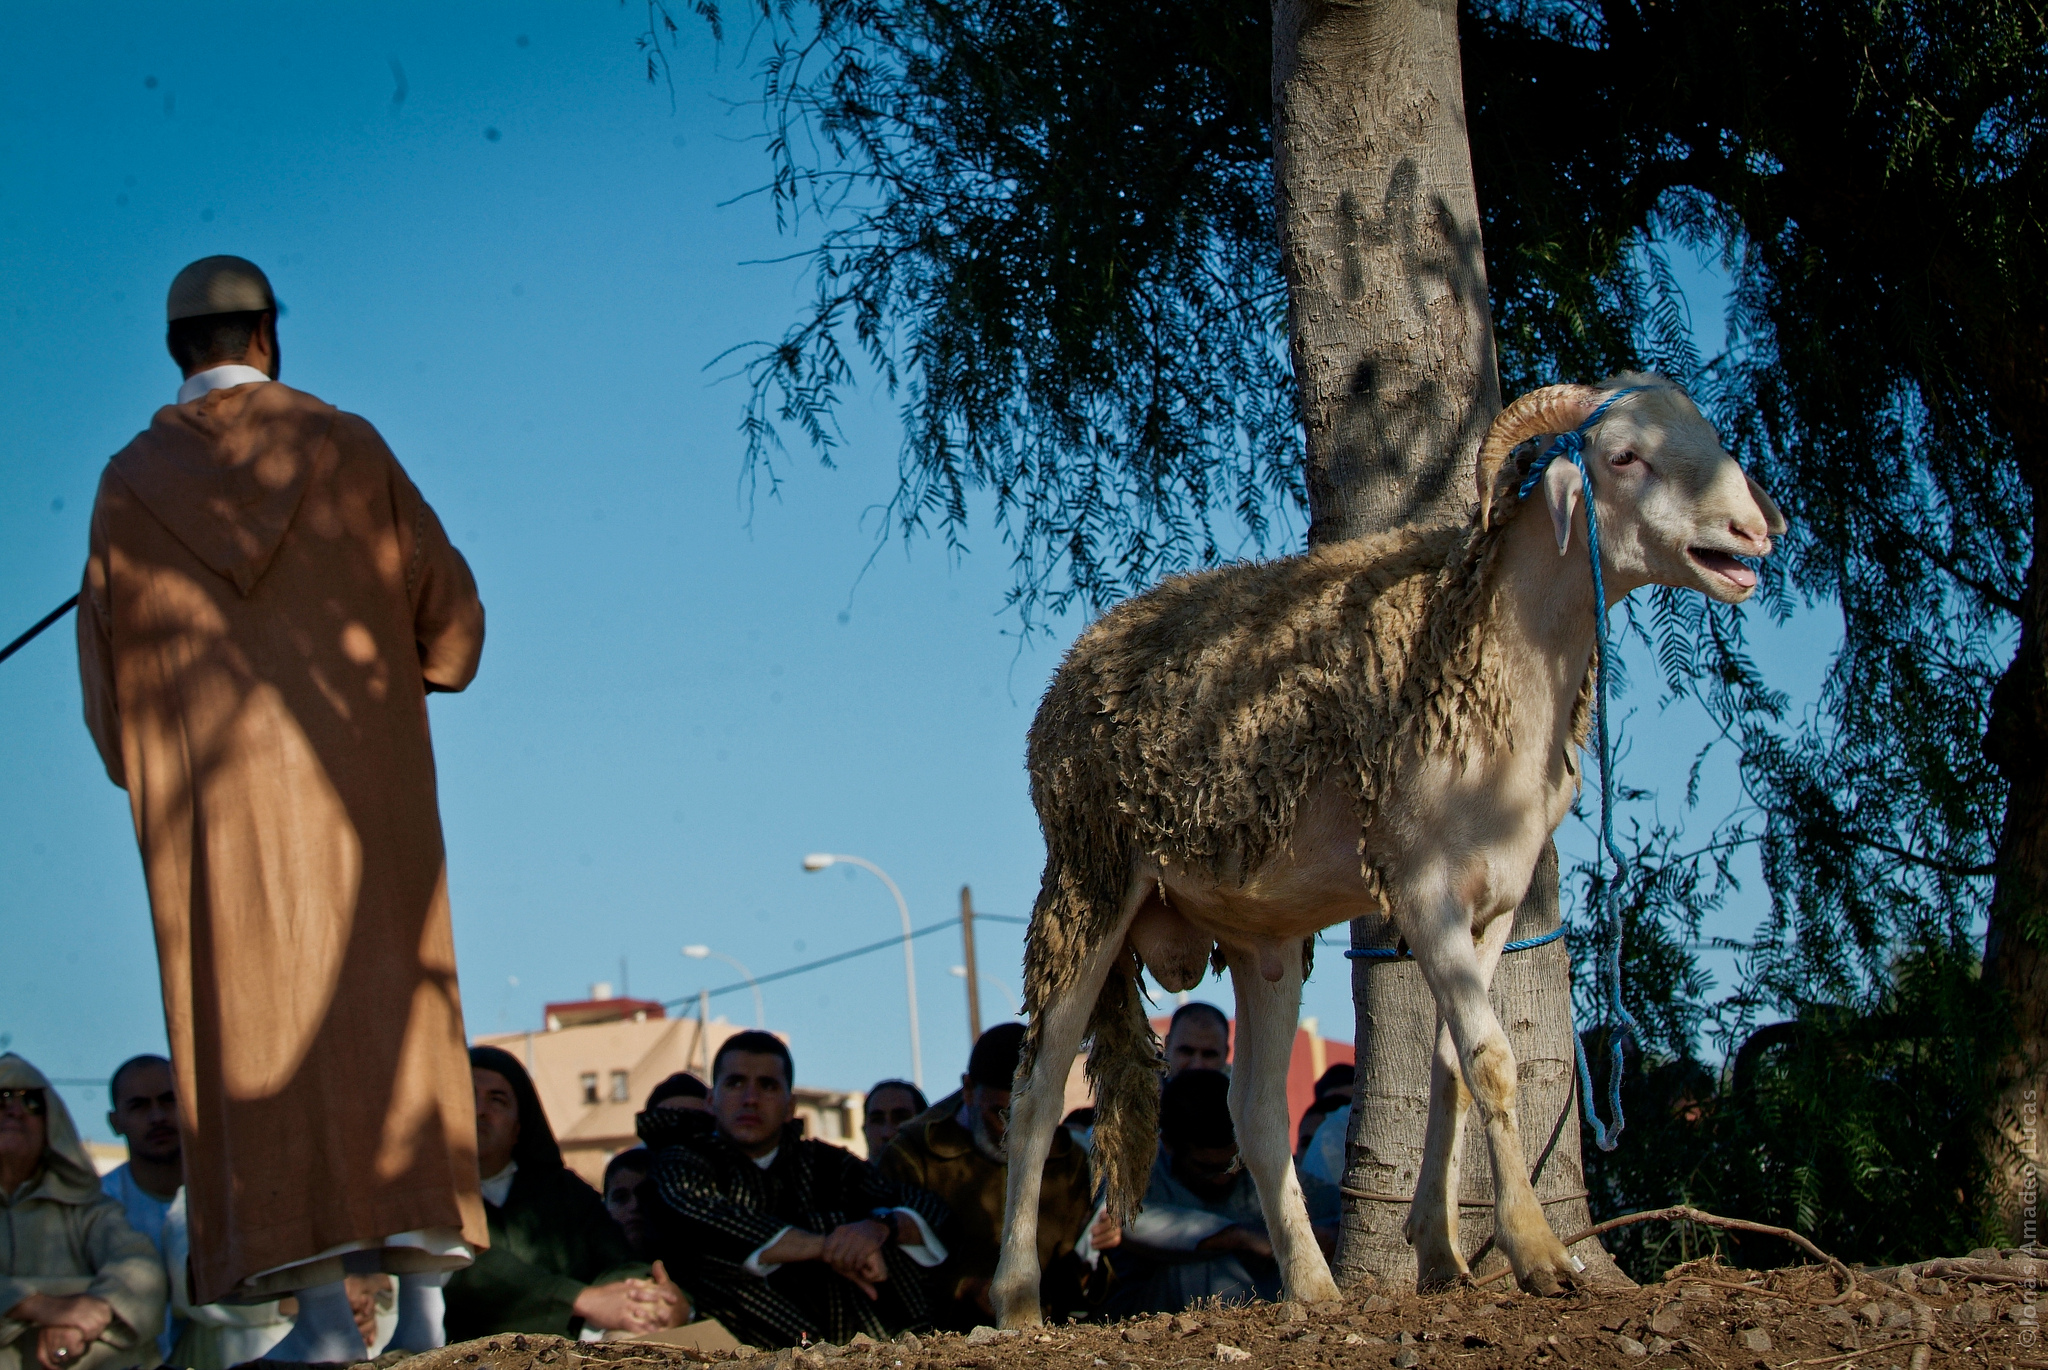 Ram awaiting sacrifice on the Eid al-Adha. Photo credit: TheAnimalDay.org, used under CC BY 2.0)